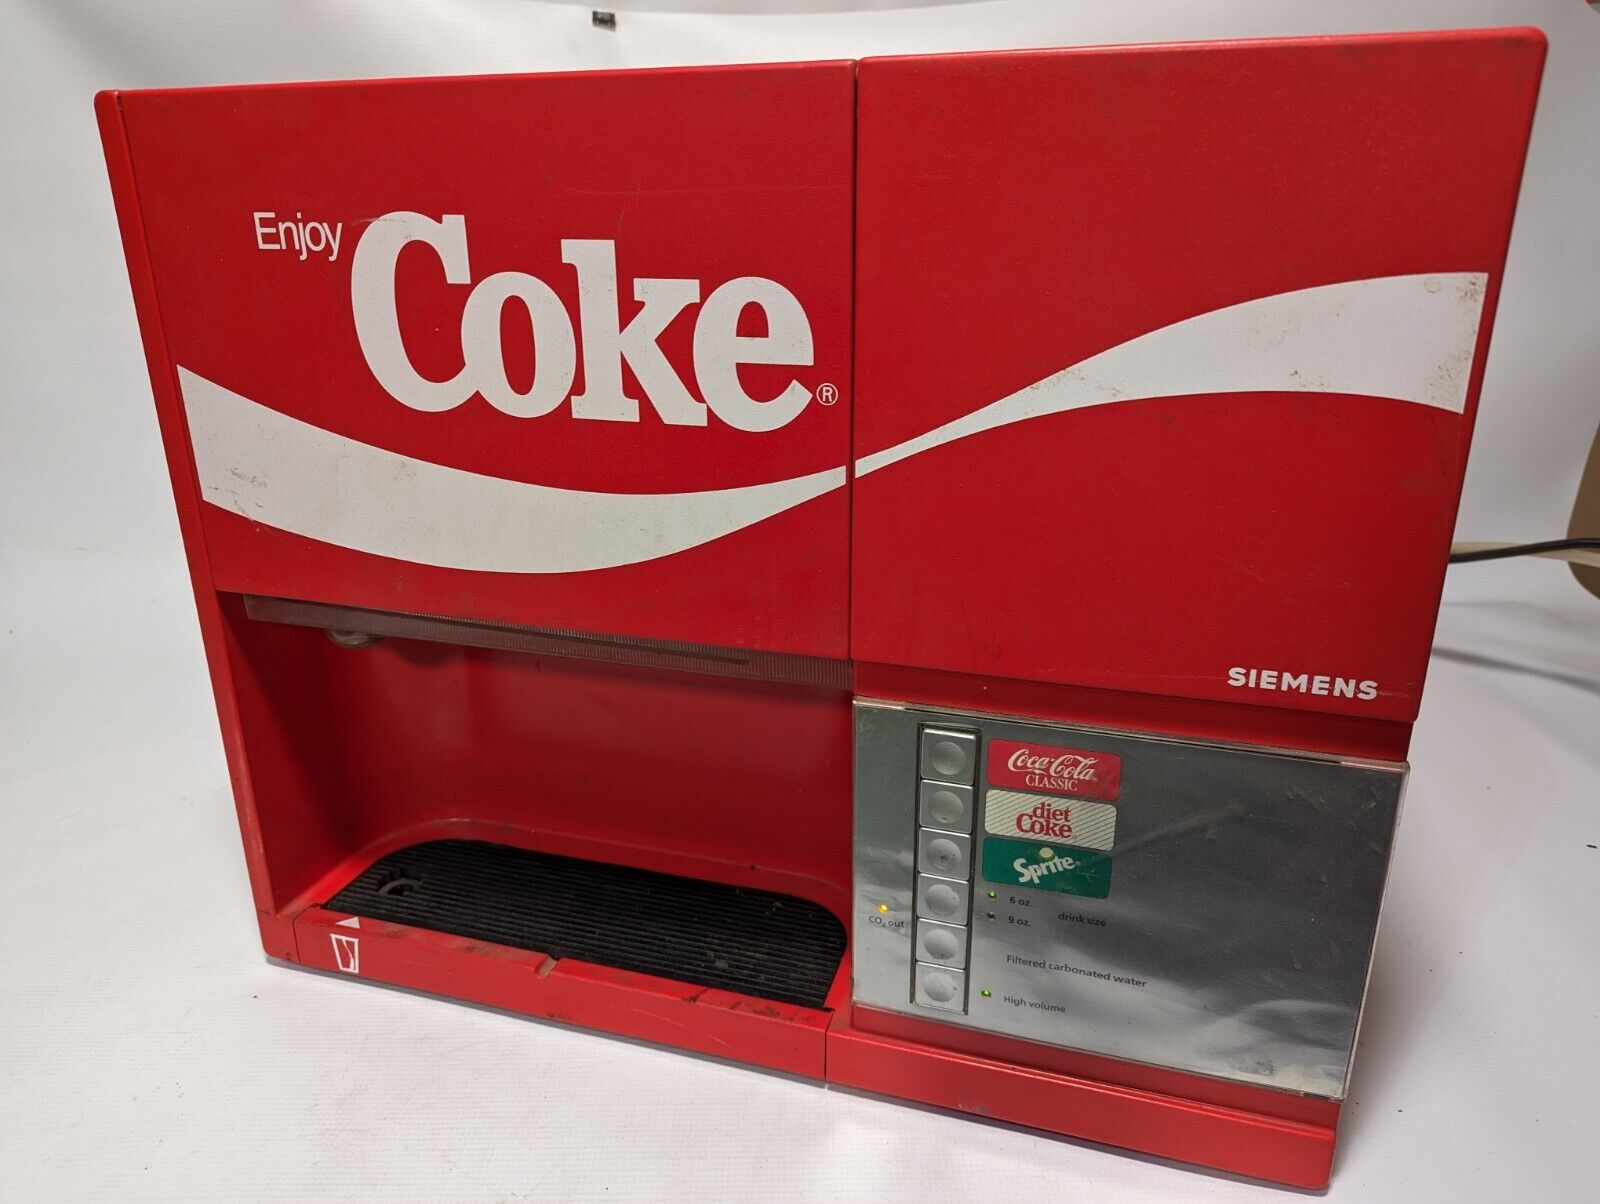 Coke Coca-Cola branded Siemens GA 3000 beverage cooler dispenser